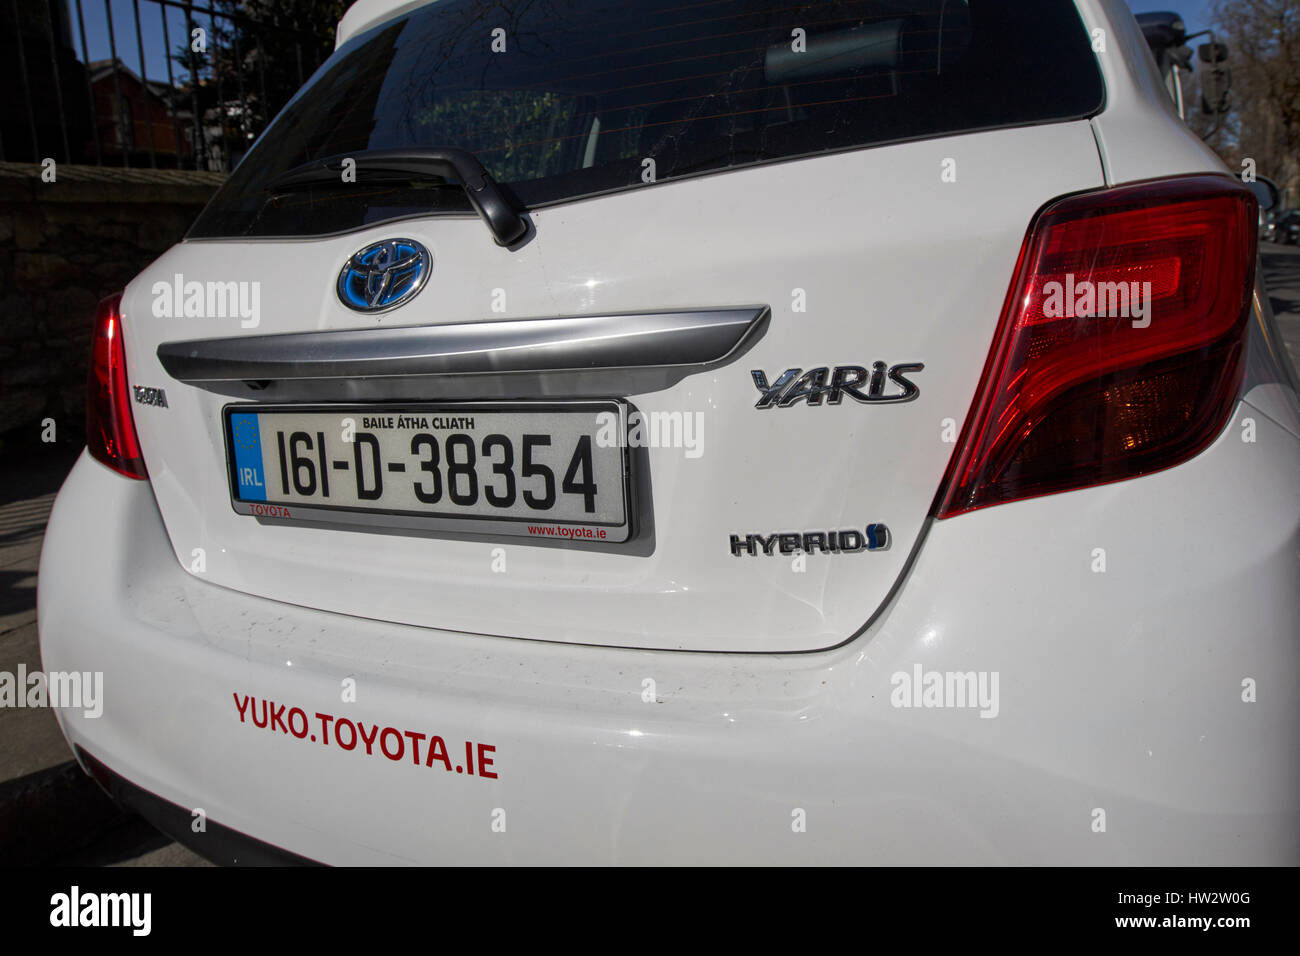 toyota yaris hybrid city car yuko car sharing club hourly rental vehicle Dublin city centre Republic of Ireland Stock Photo